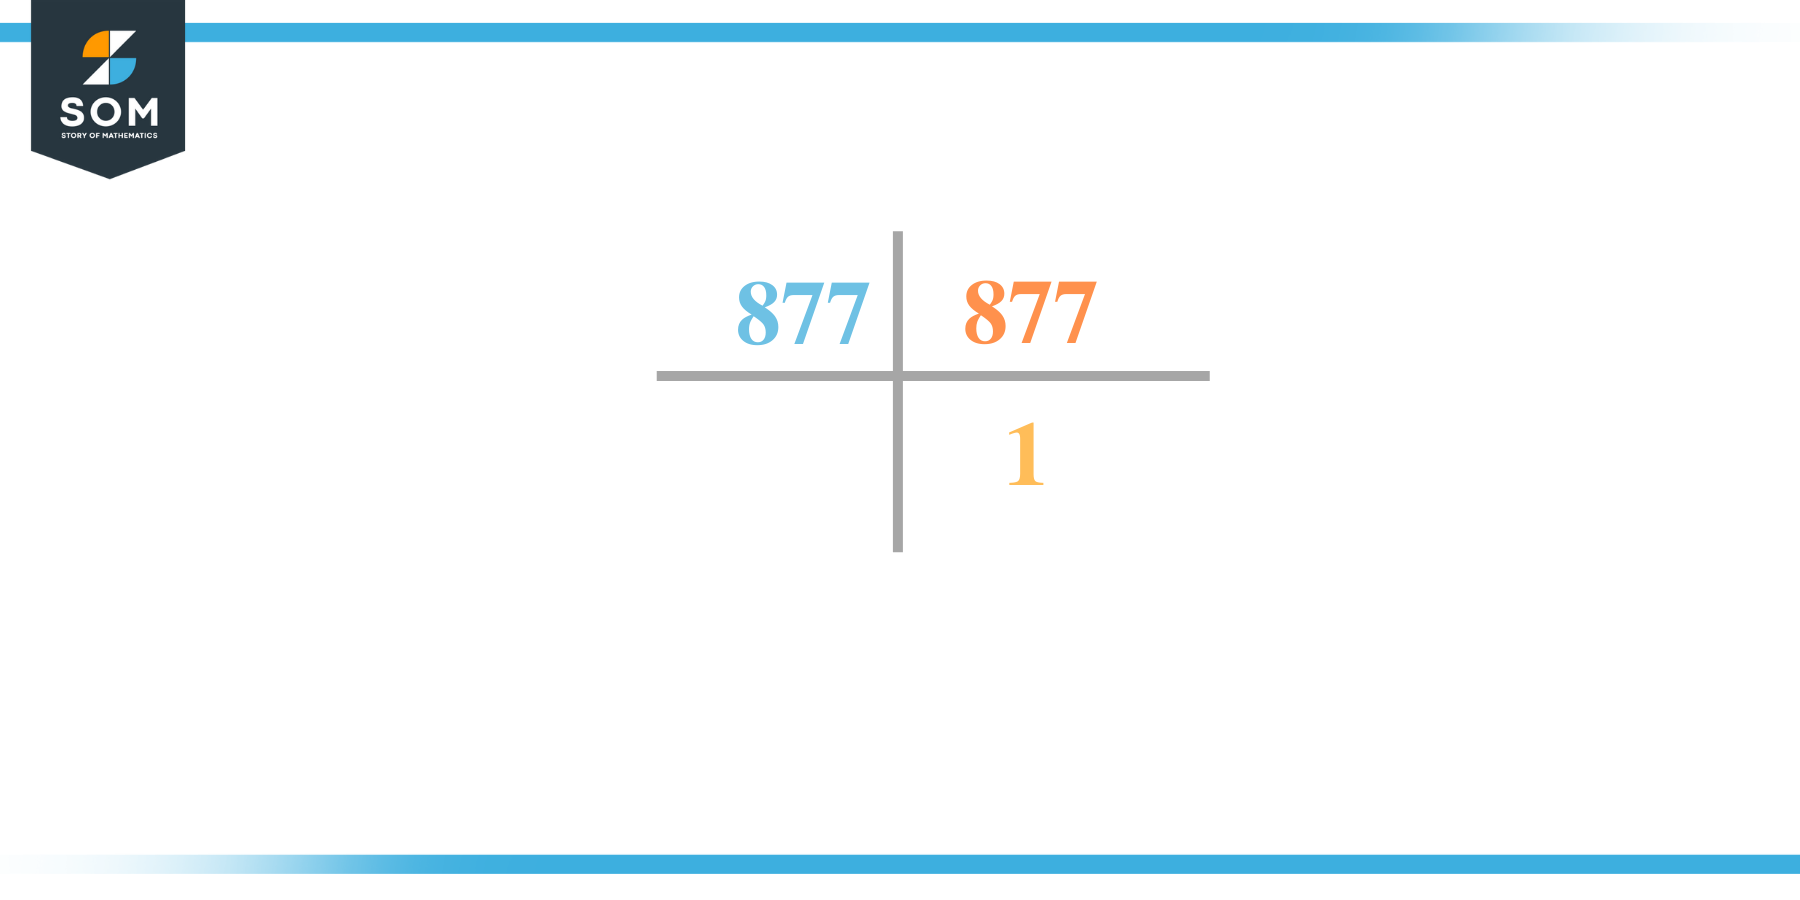 Prime factorization of 877